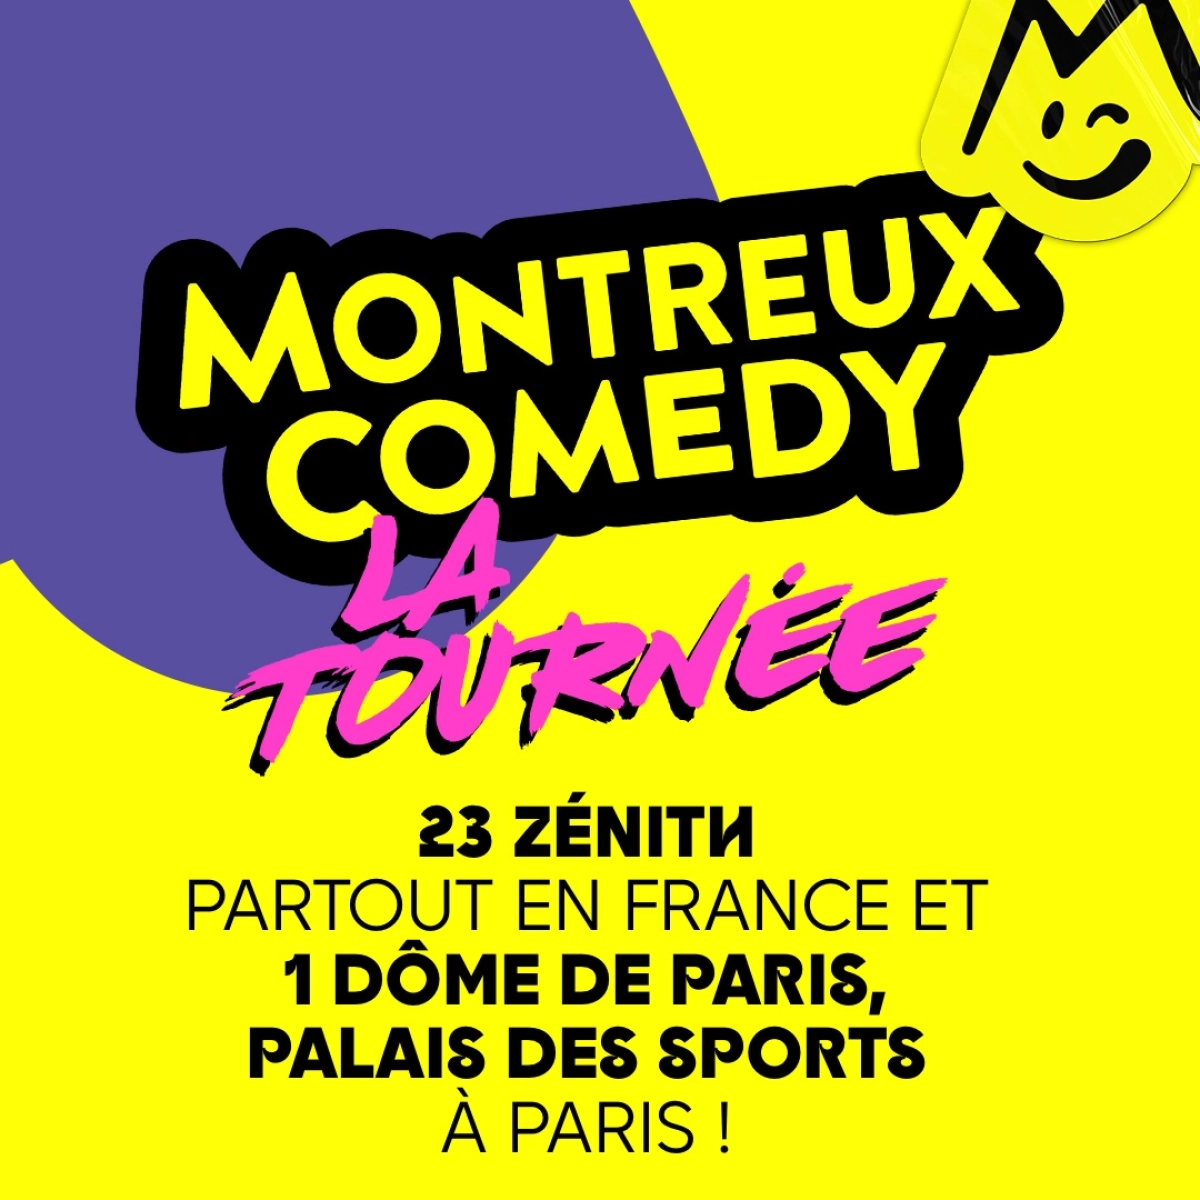 Montreux Comedy - La Tournee at Les Arenes de Metz Tickets